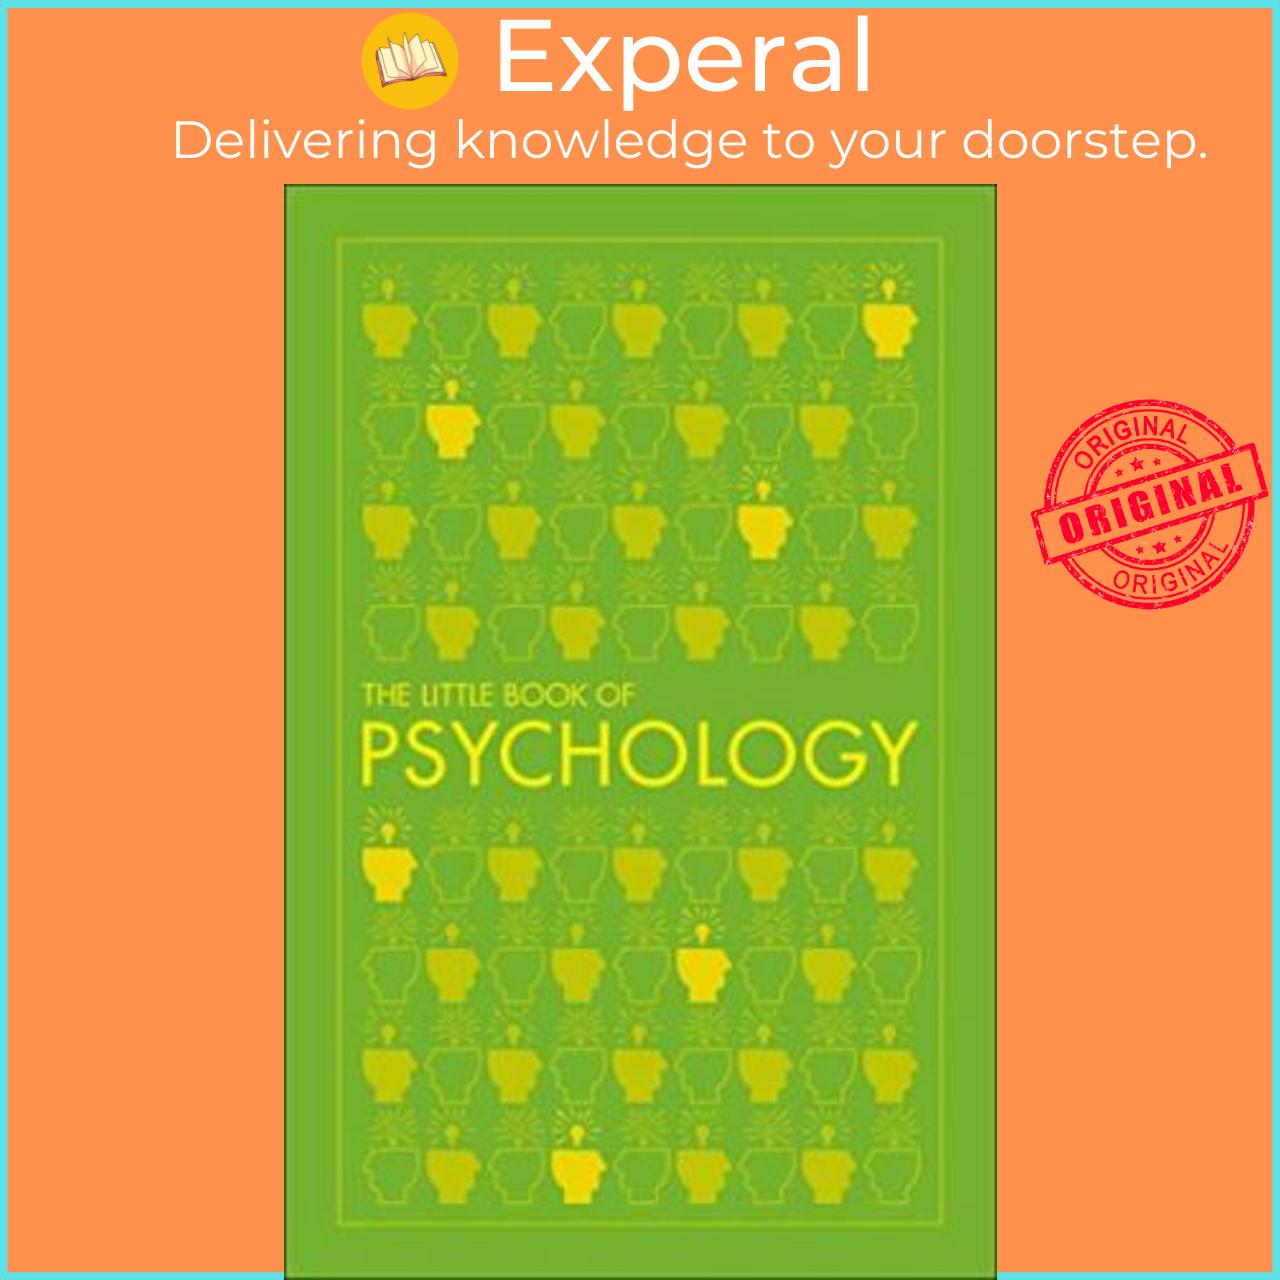 Sách - The Little Book of Psychology by DK (UK edition, paperback)